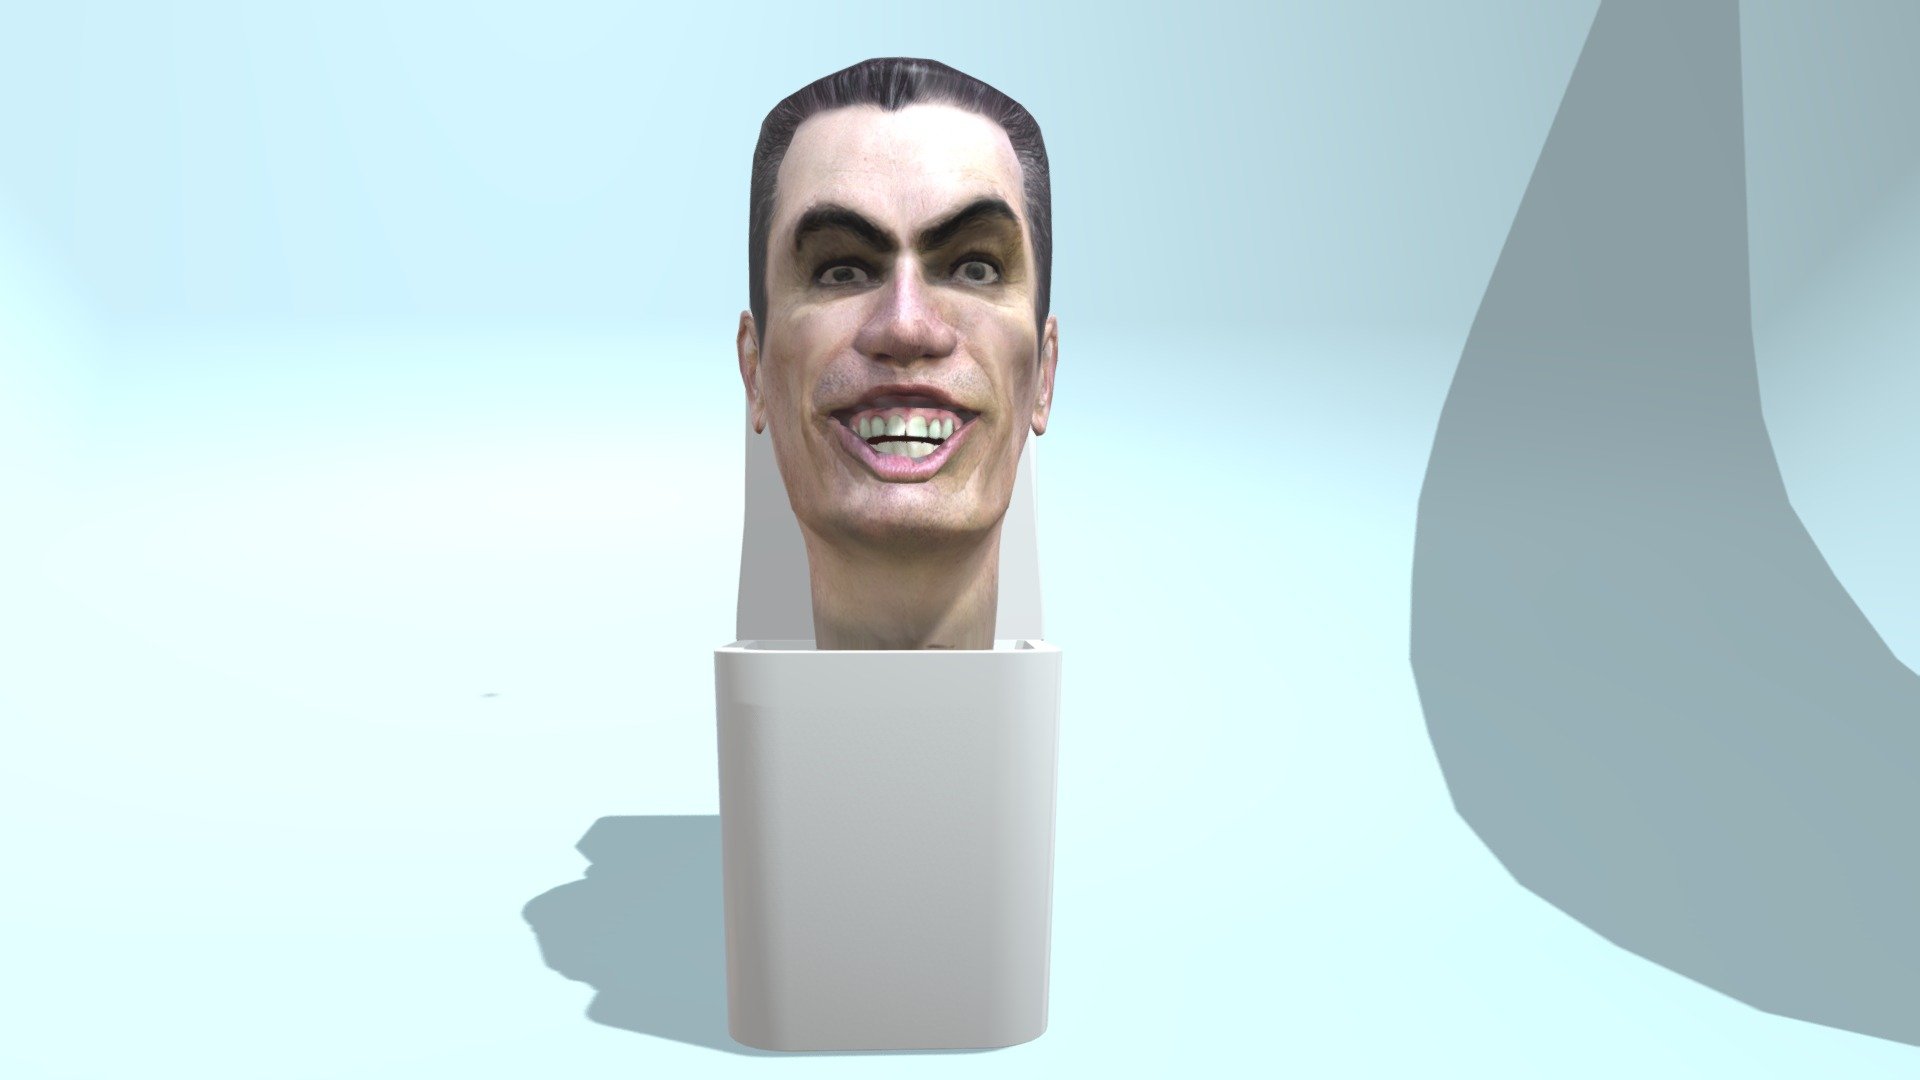 SKIBIDI TOILET G-MAN G-TOILET, 3D models download